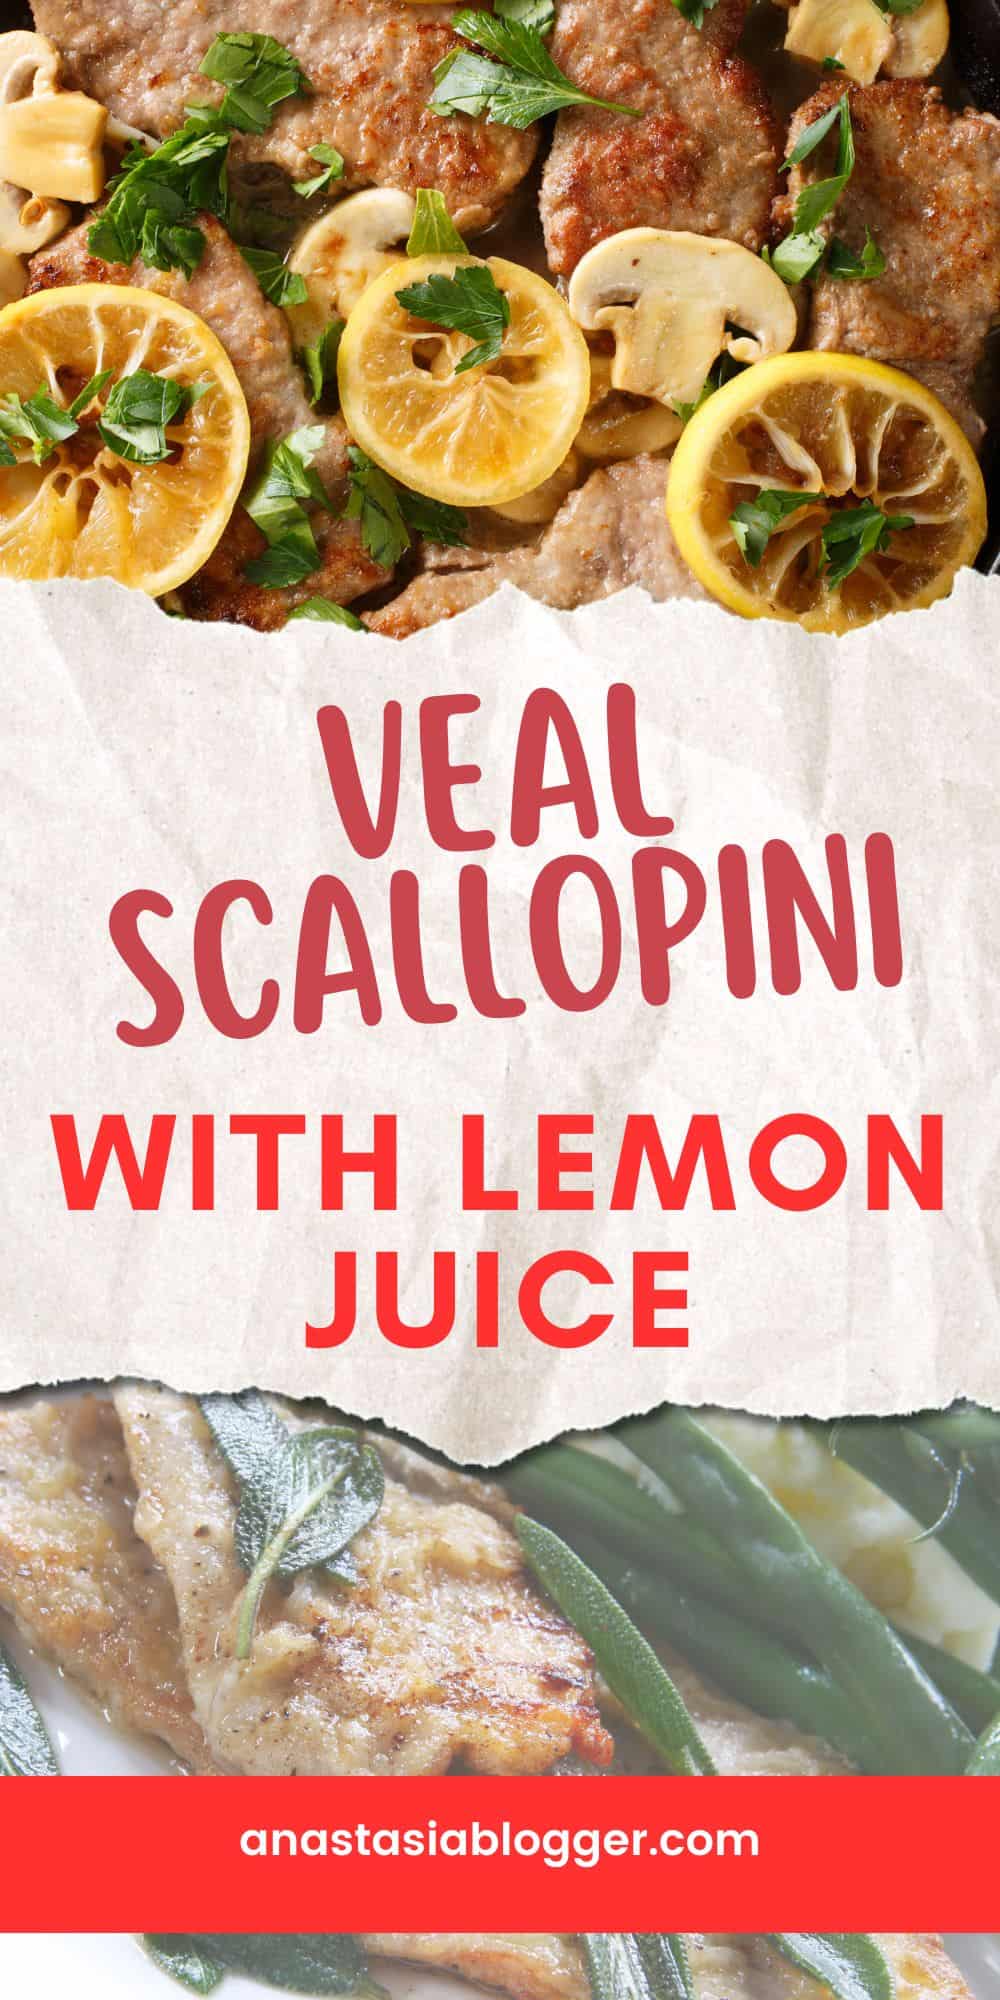 veal scallopini recipe with lemon juice piccata sauce